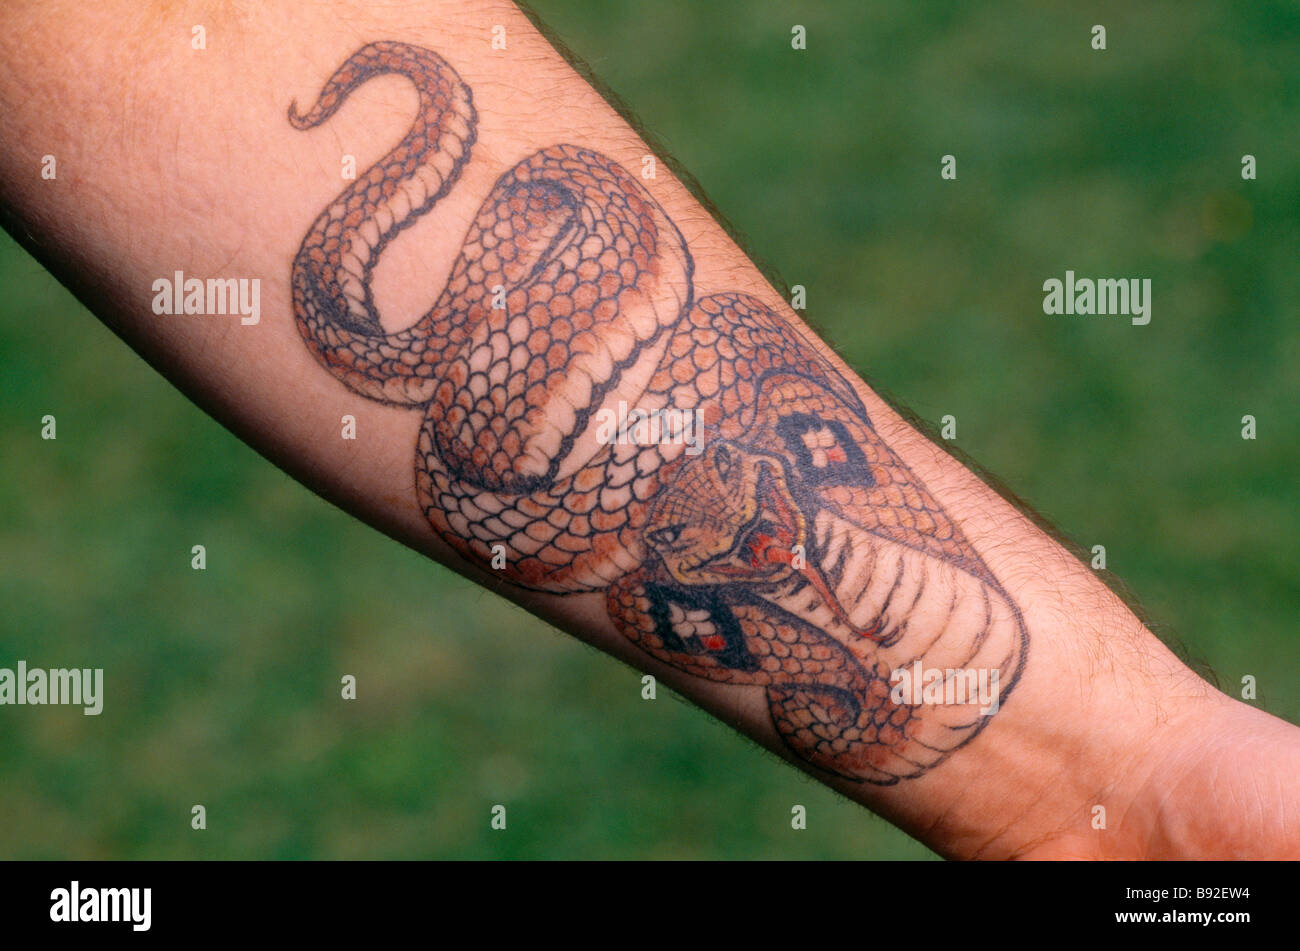 2. Realistic Snake Forearm Tattoo - wide 6